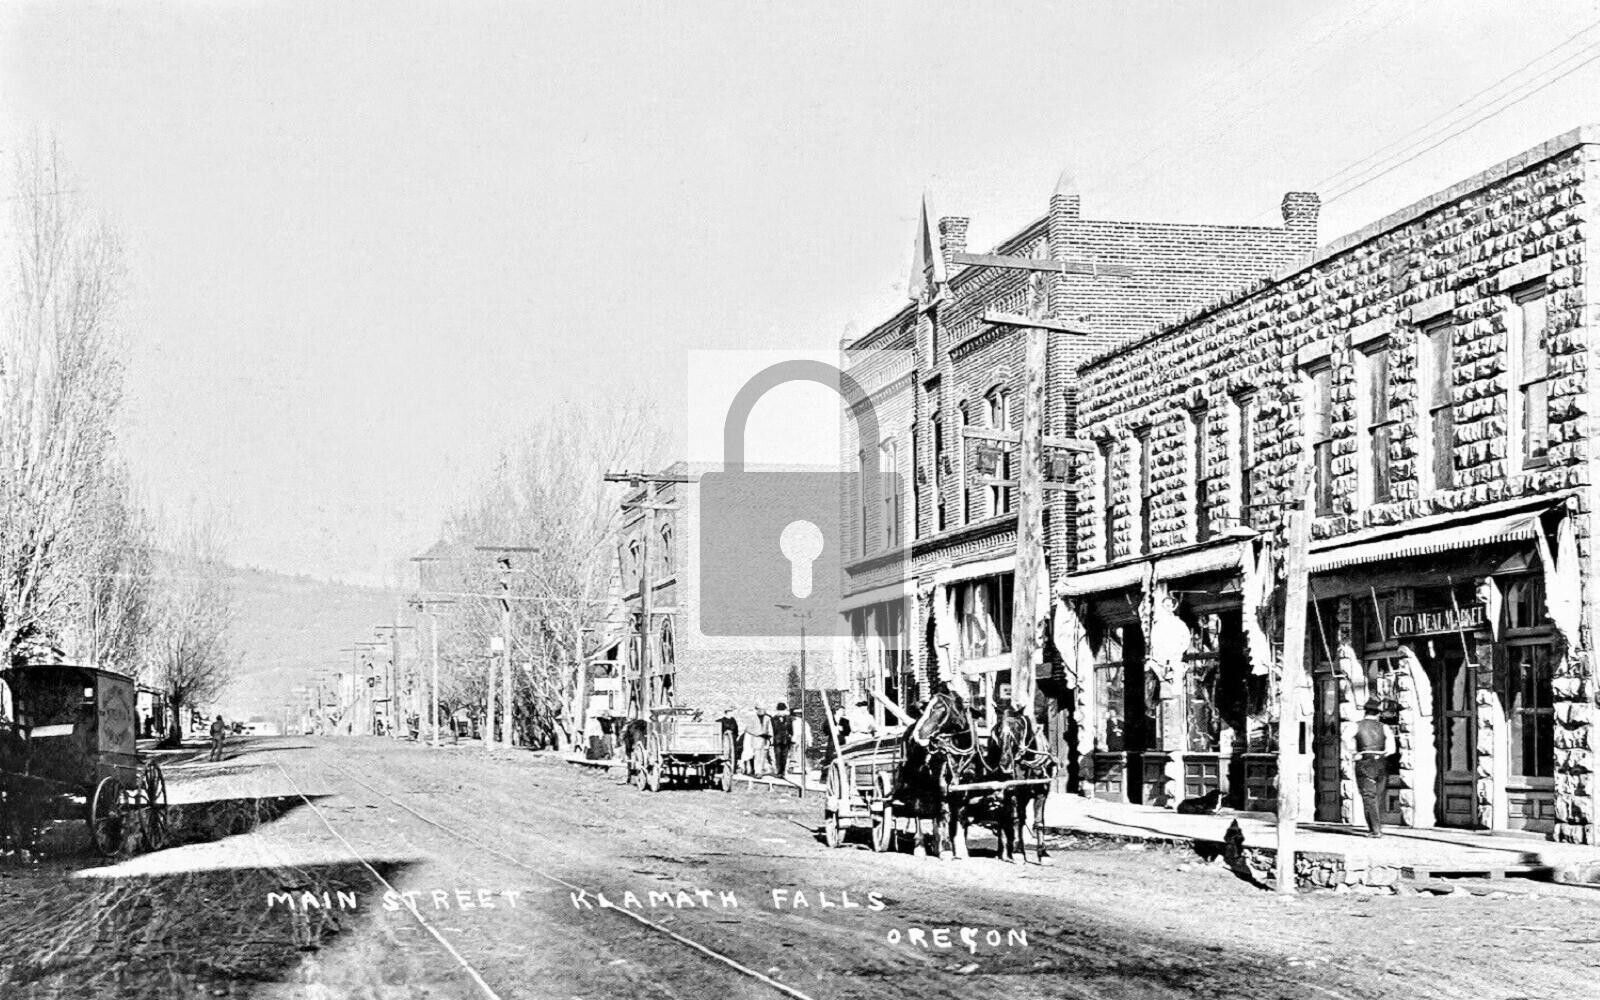 Main Street View Klamath Falls Oregon OR Reprint Postcard